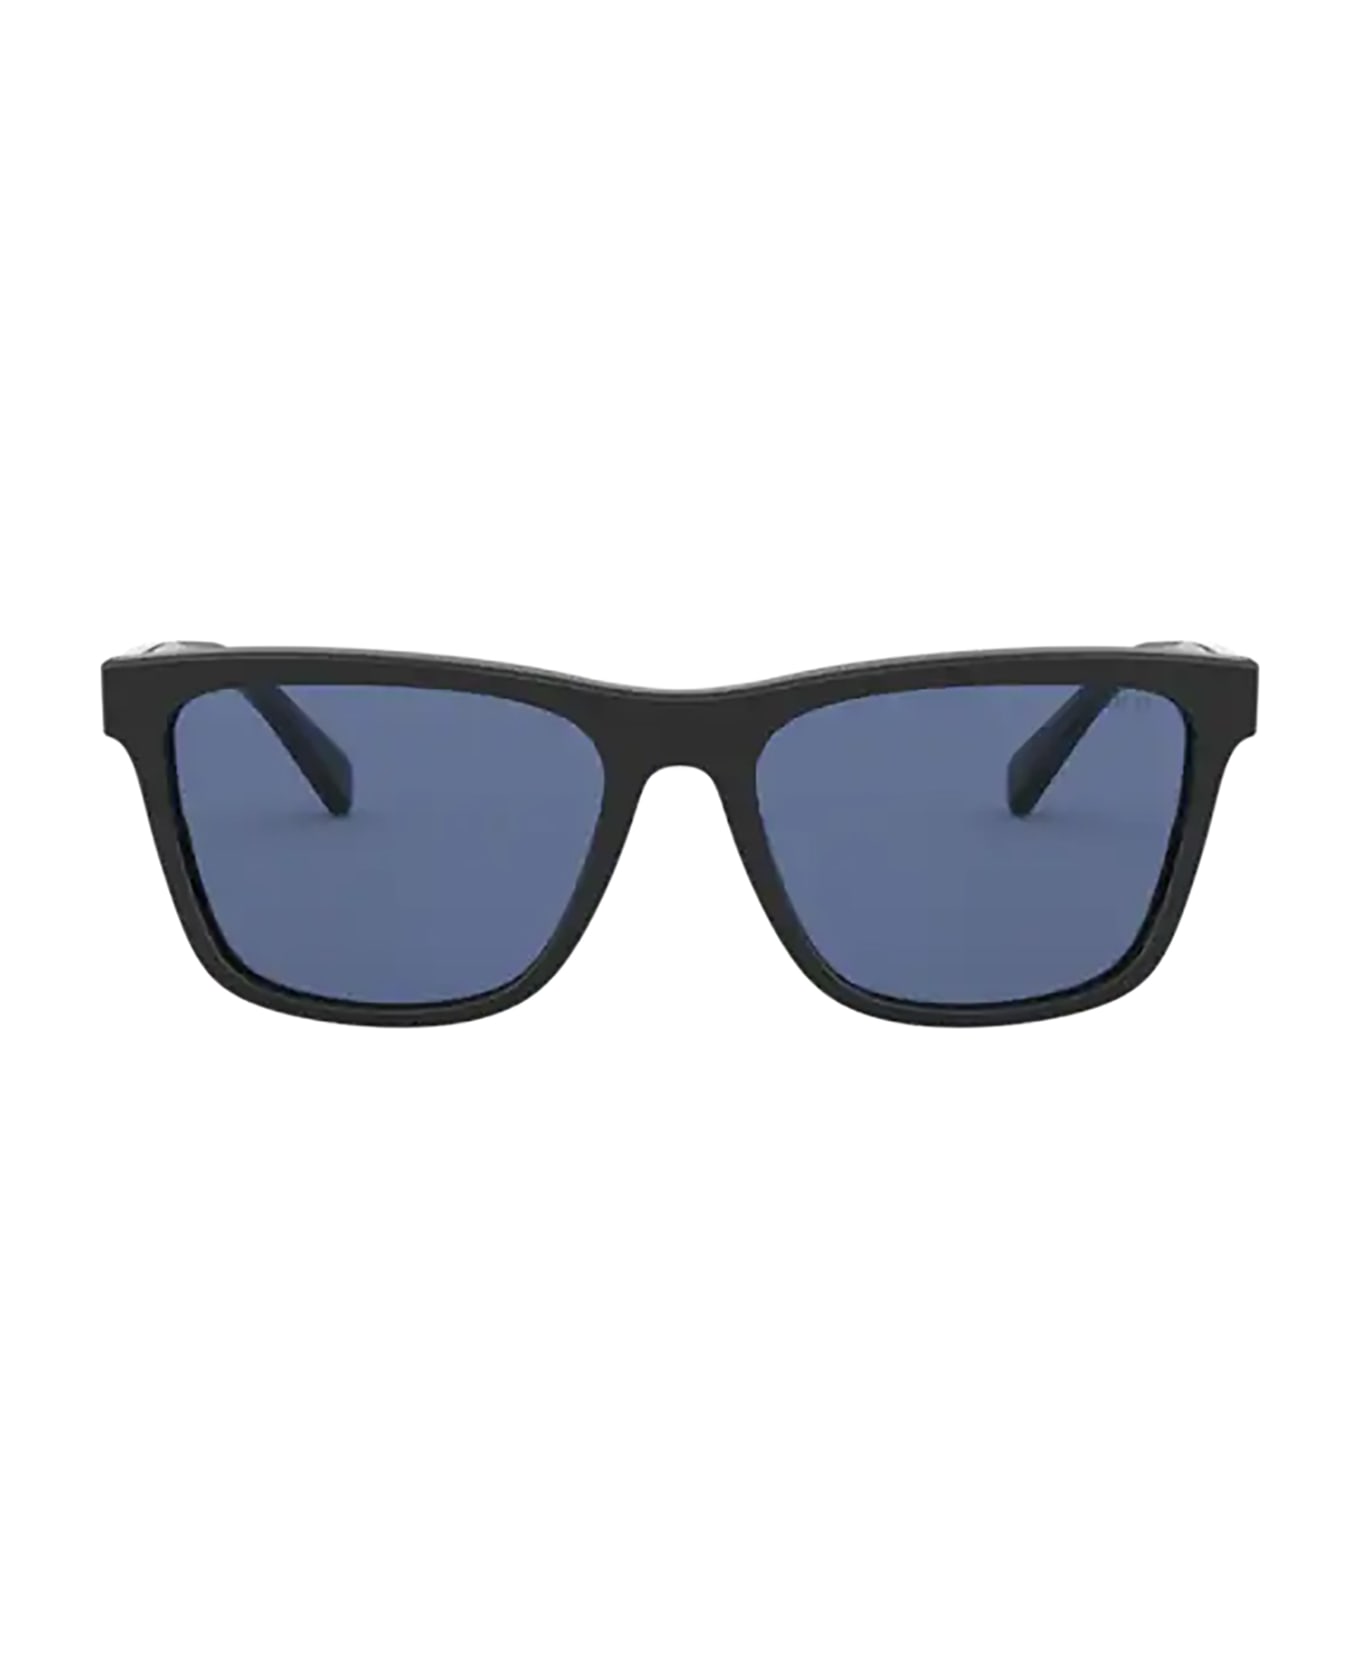 Polo Ralph Lauren Ph4167 Shiny Black Sunglasses - SHINY BLACK サングラス